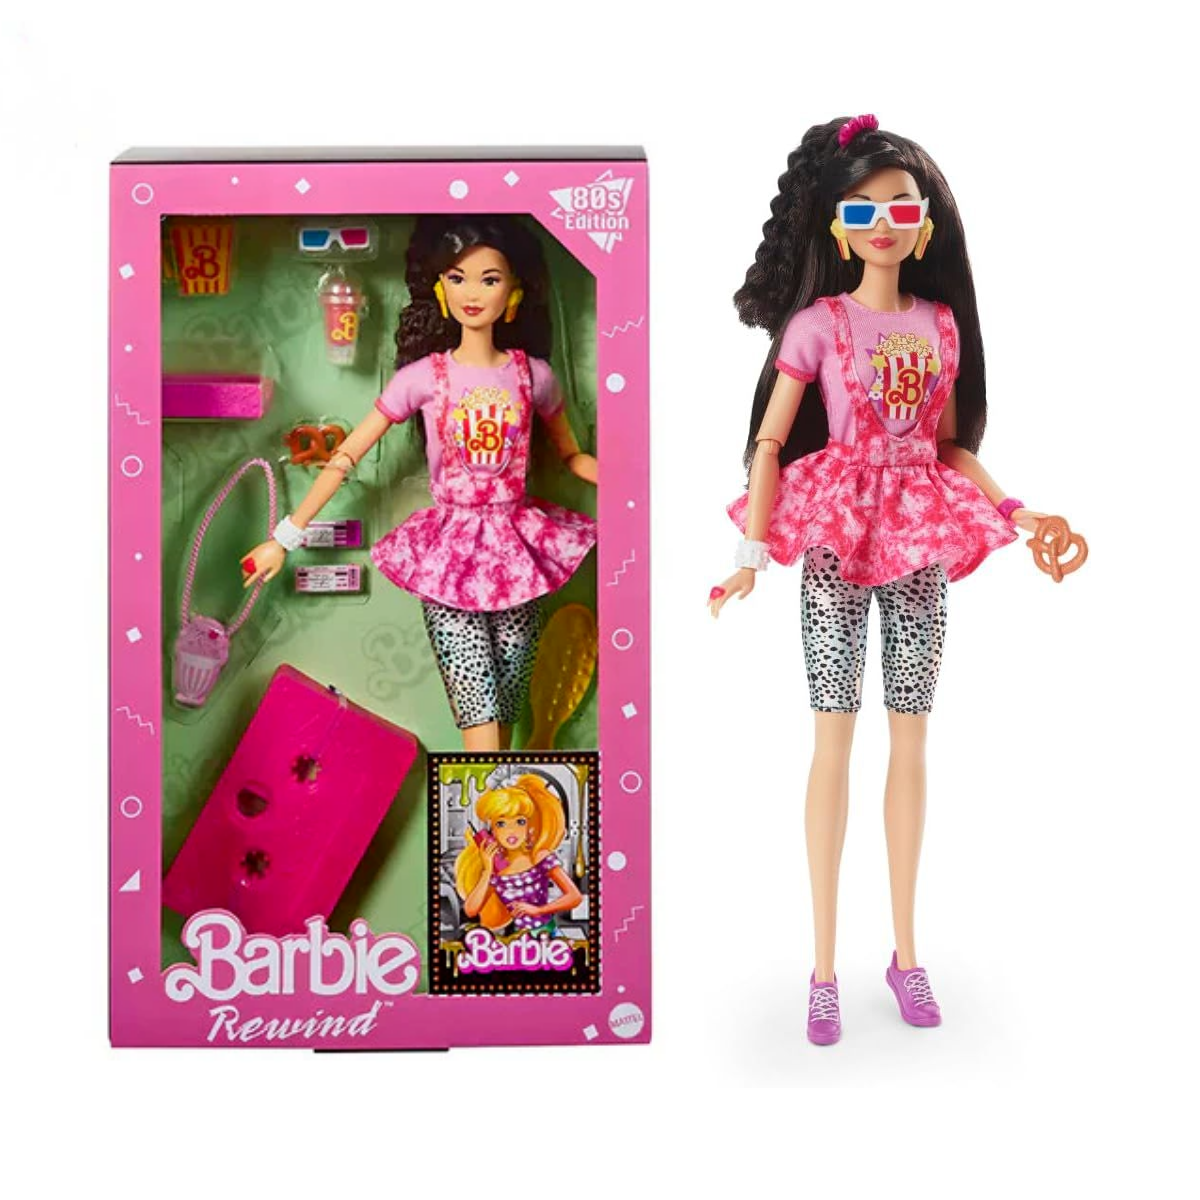 Кукла Barbie коллекционная Rewind в стиле 1980х кукла barbie bmr1959 блондинка коллекционная